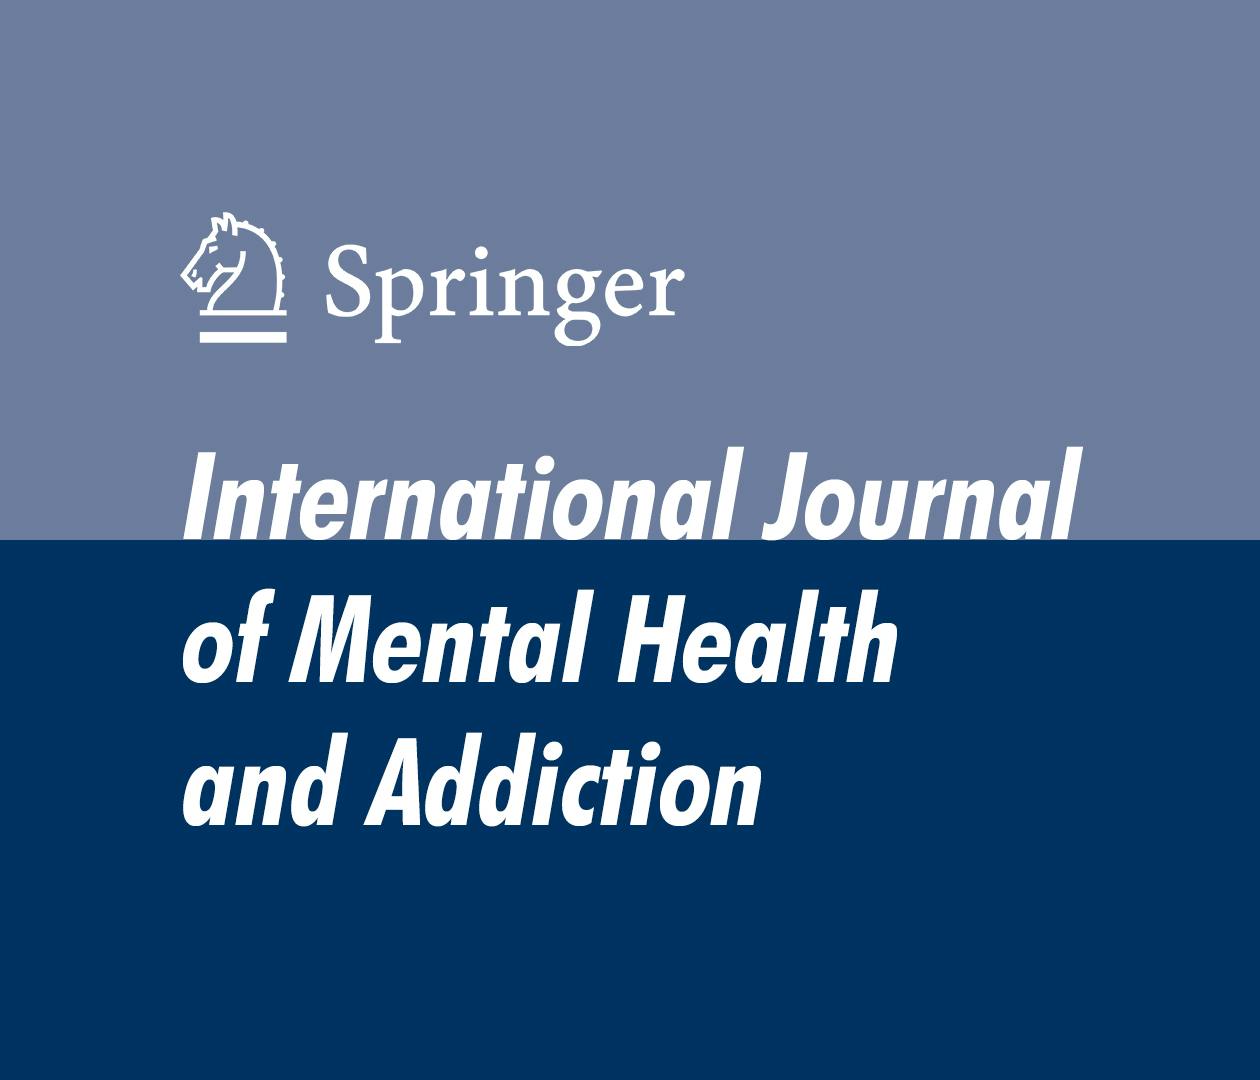 Scritta bianca "Springer - International Journal of Mental Health" su sfondo blu e azzurro.